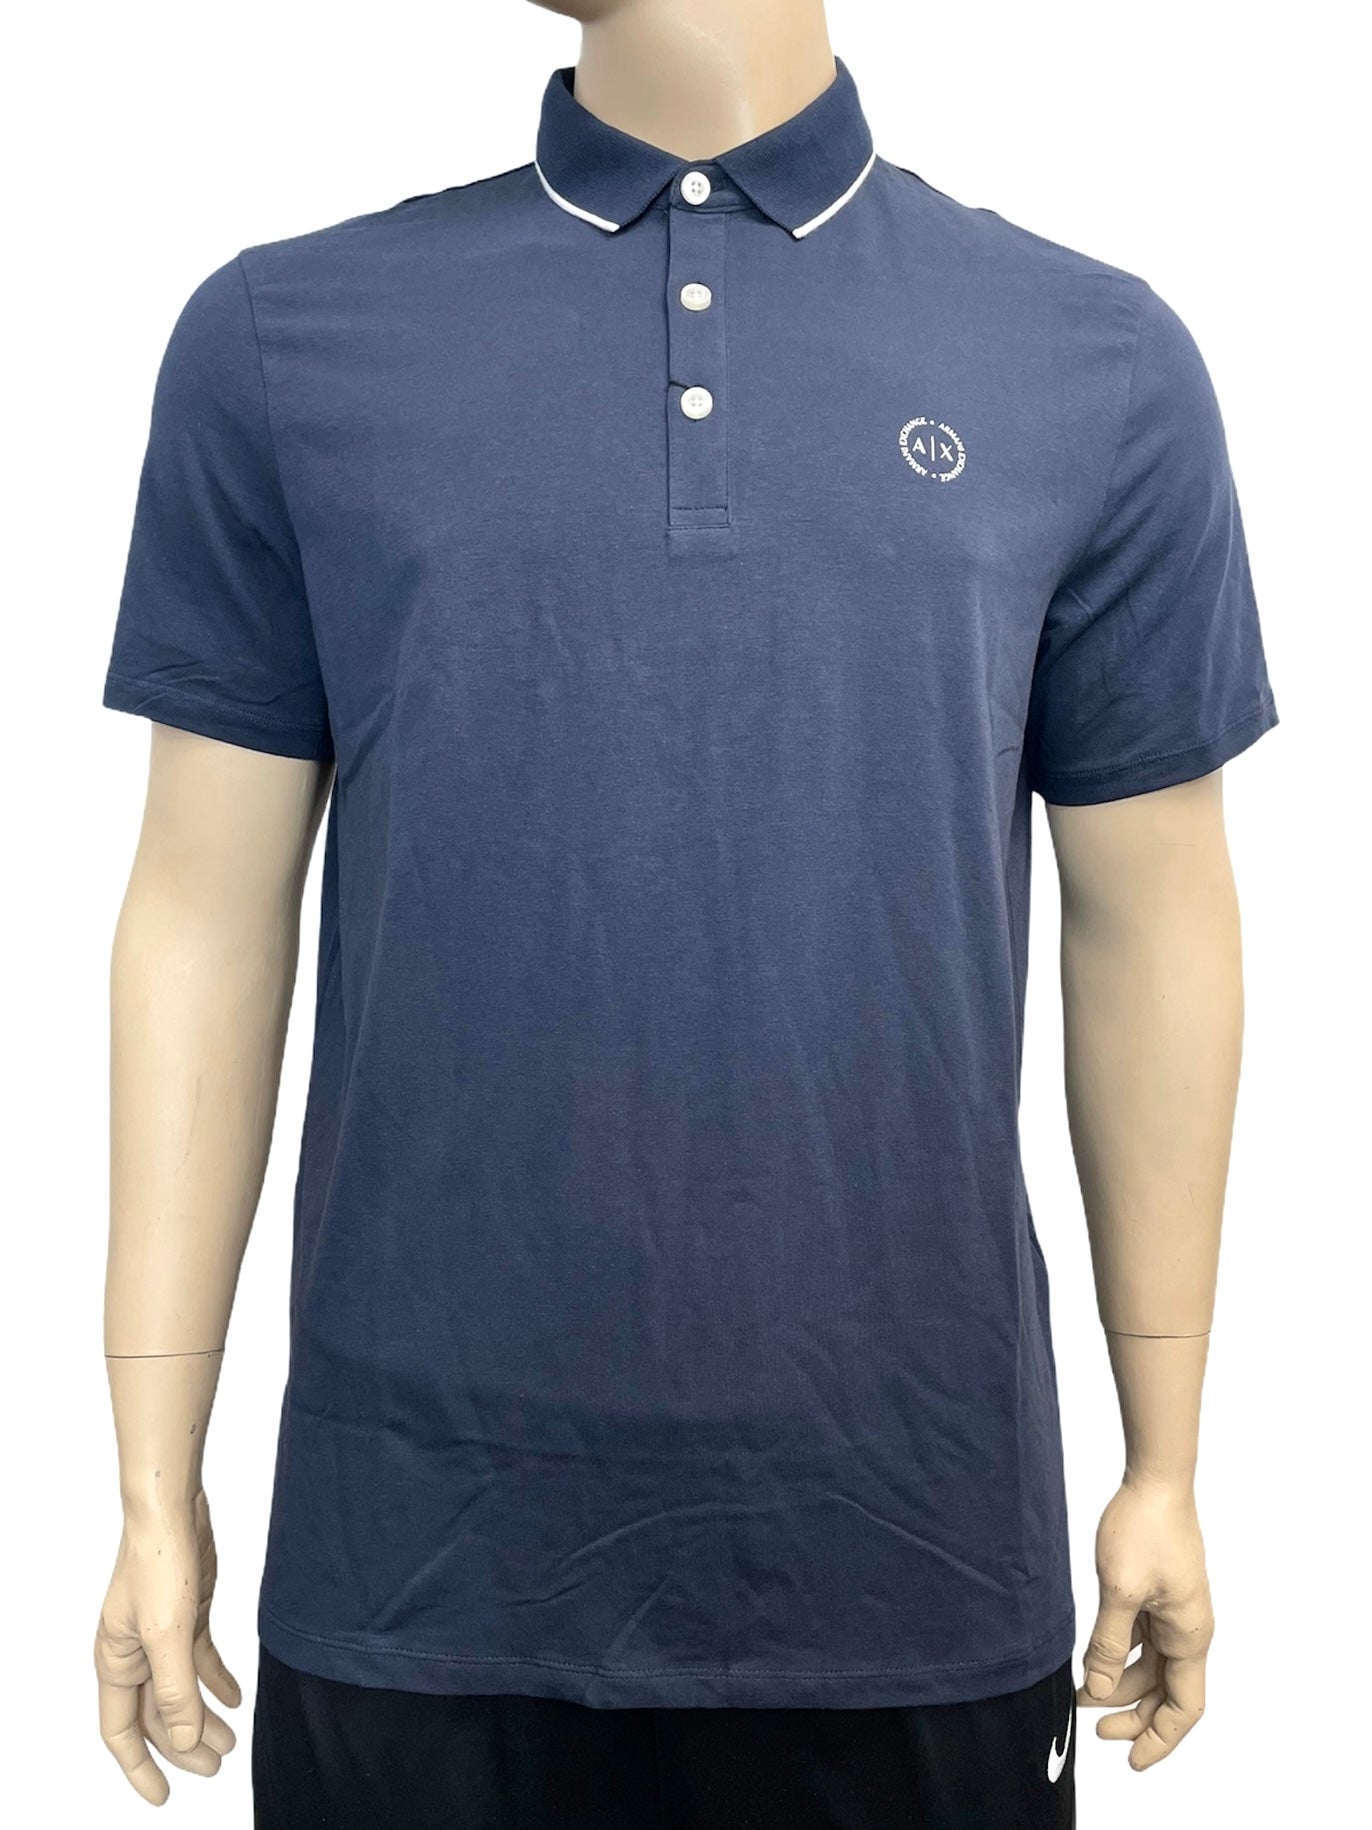 Men's Jersey Polo Shirt in Navy XL